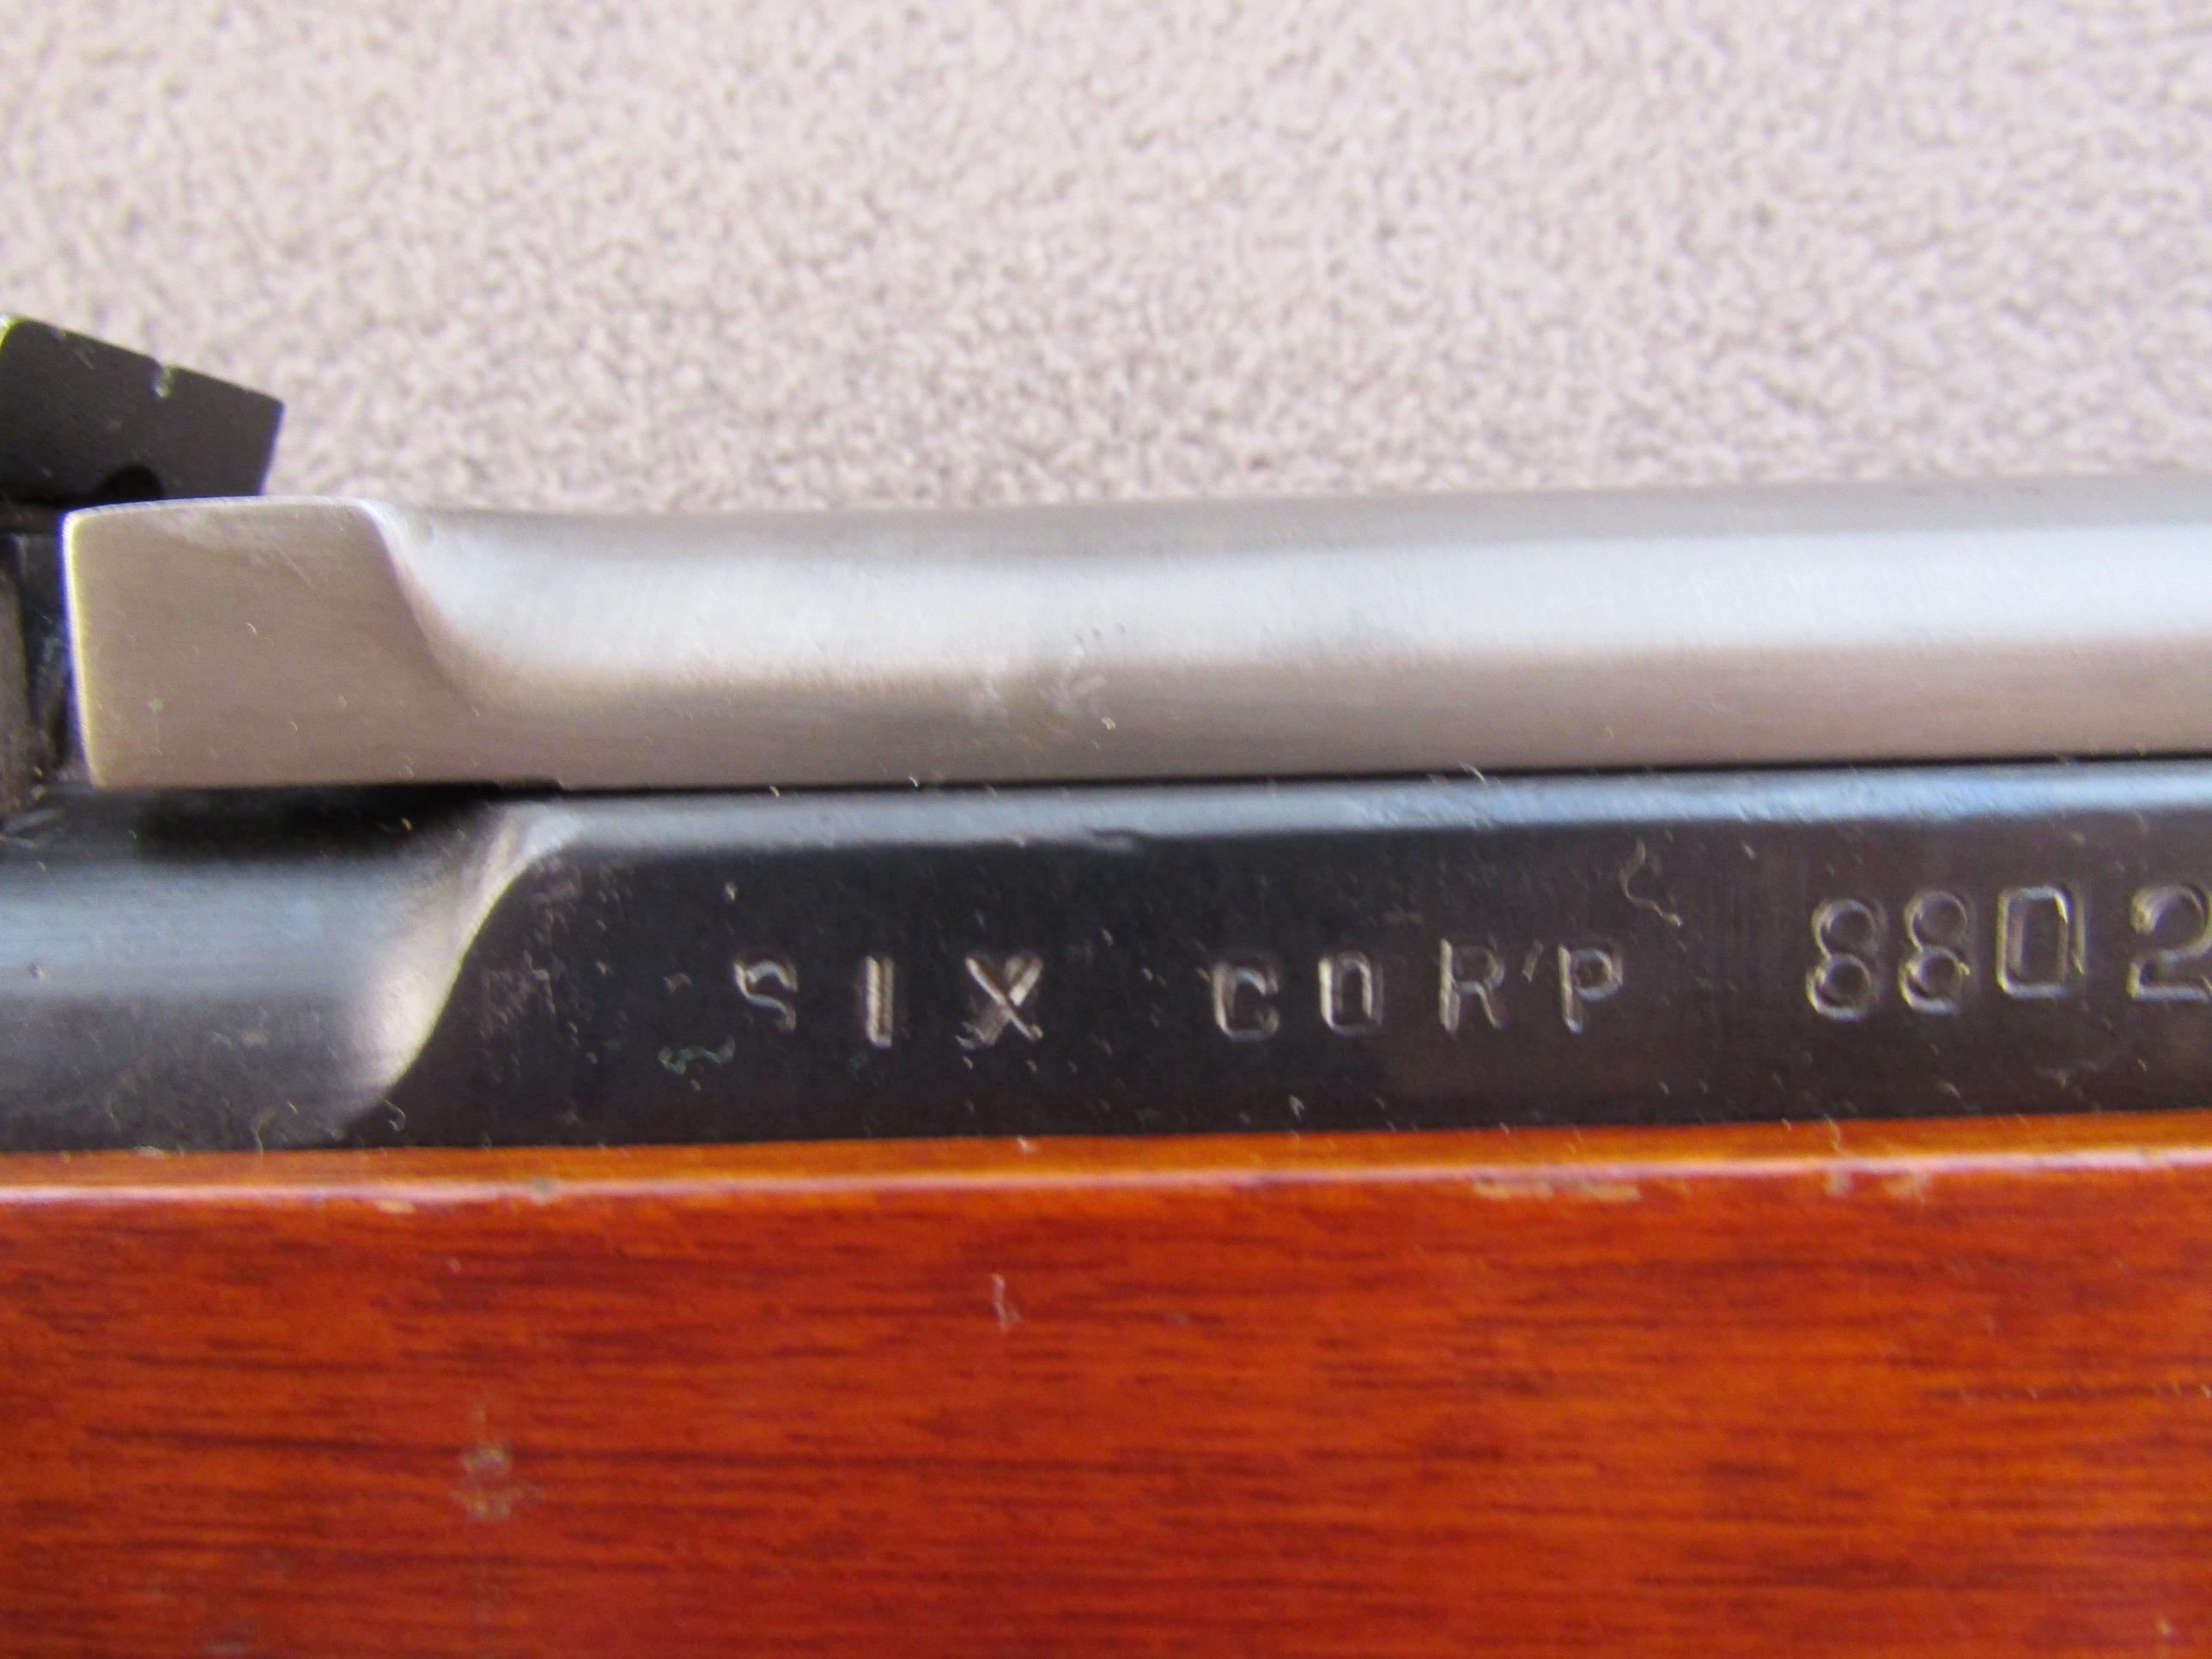 CHINESE Model SKS, Semi-Auto Rifle, 7.62x39, S#8802975